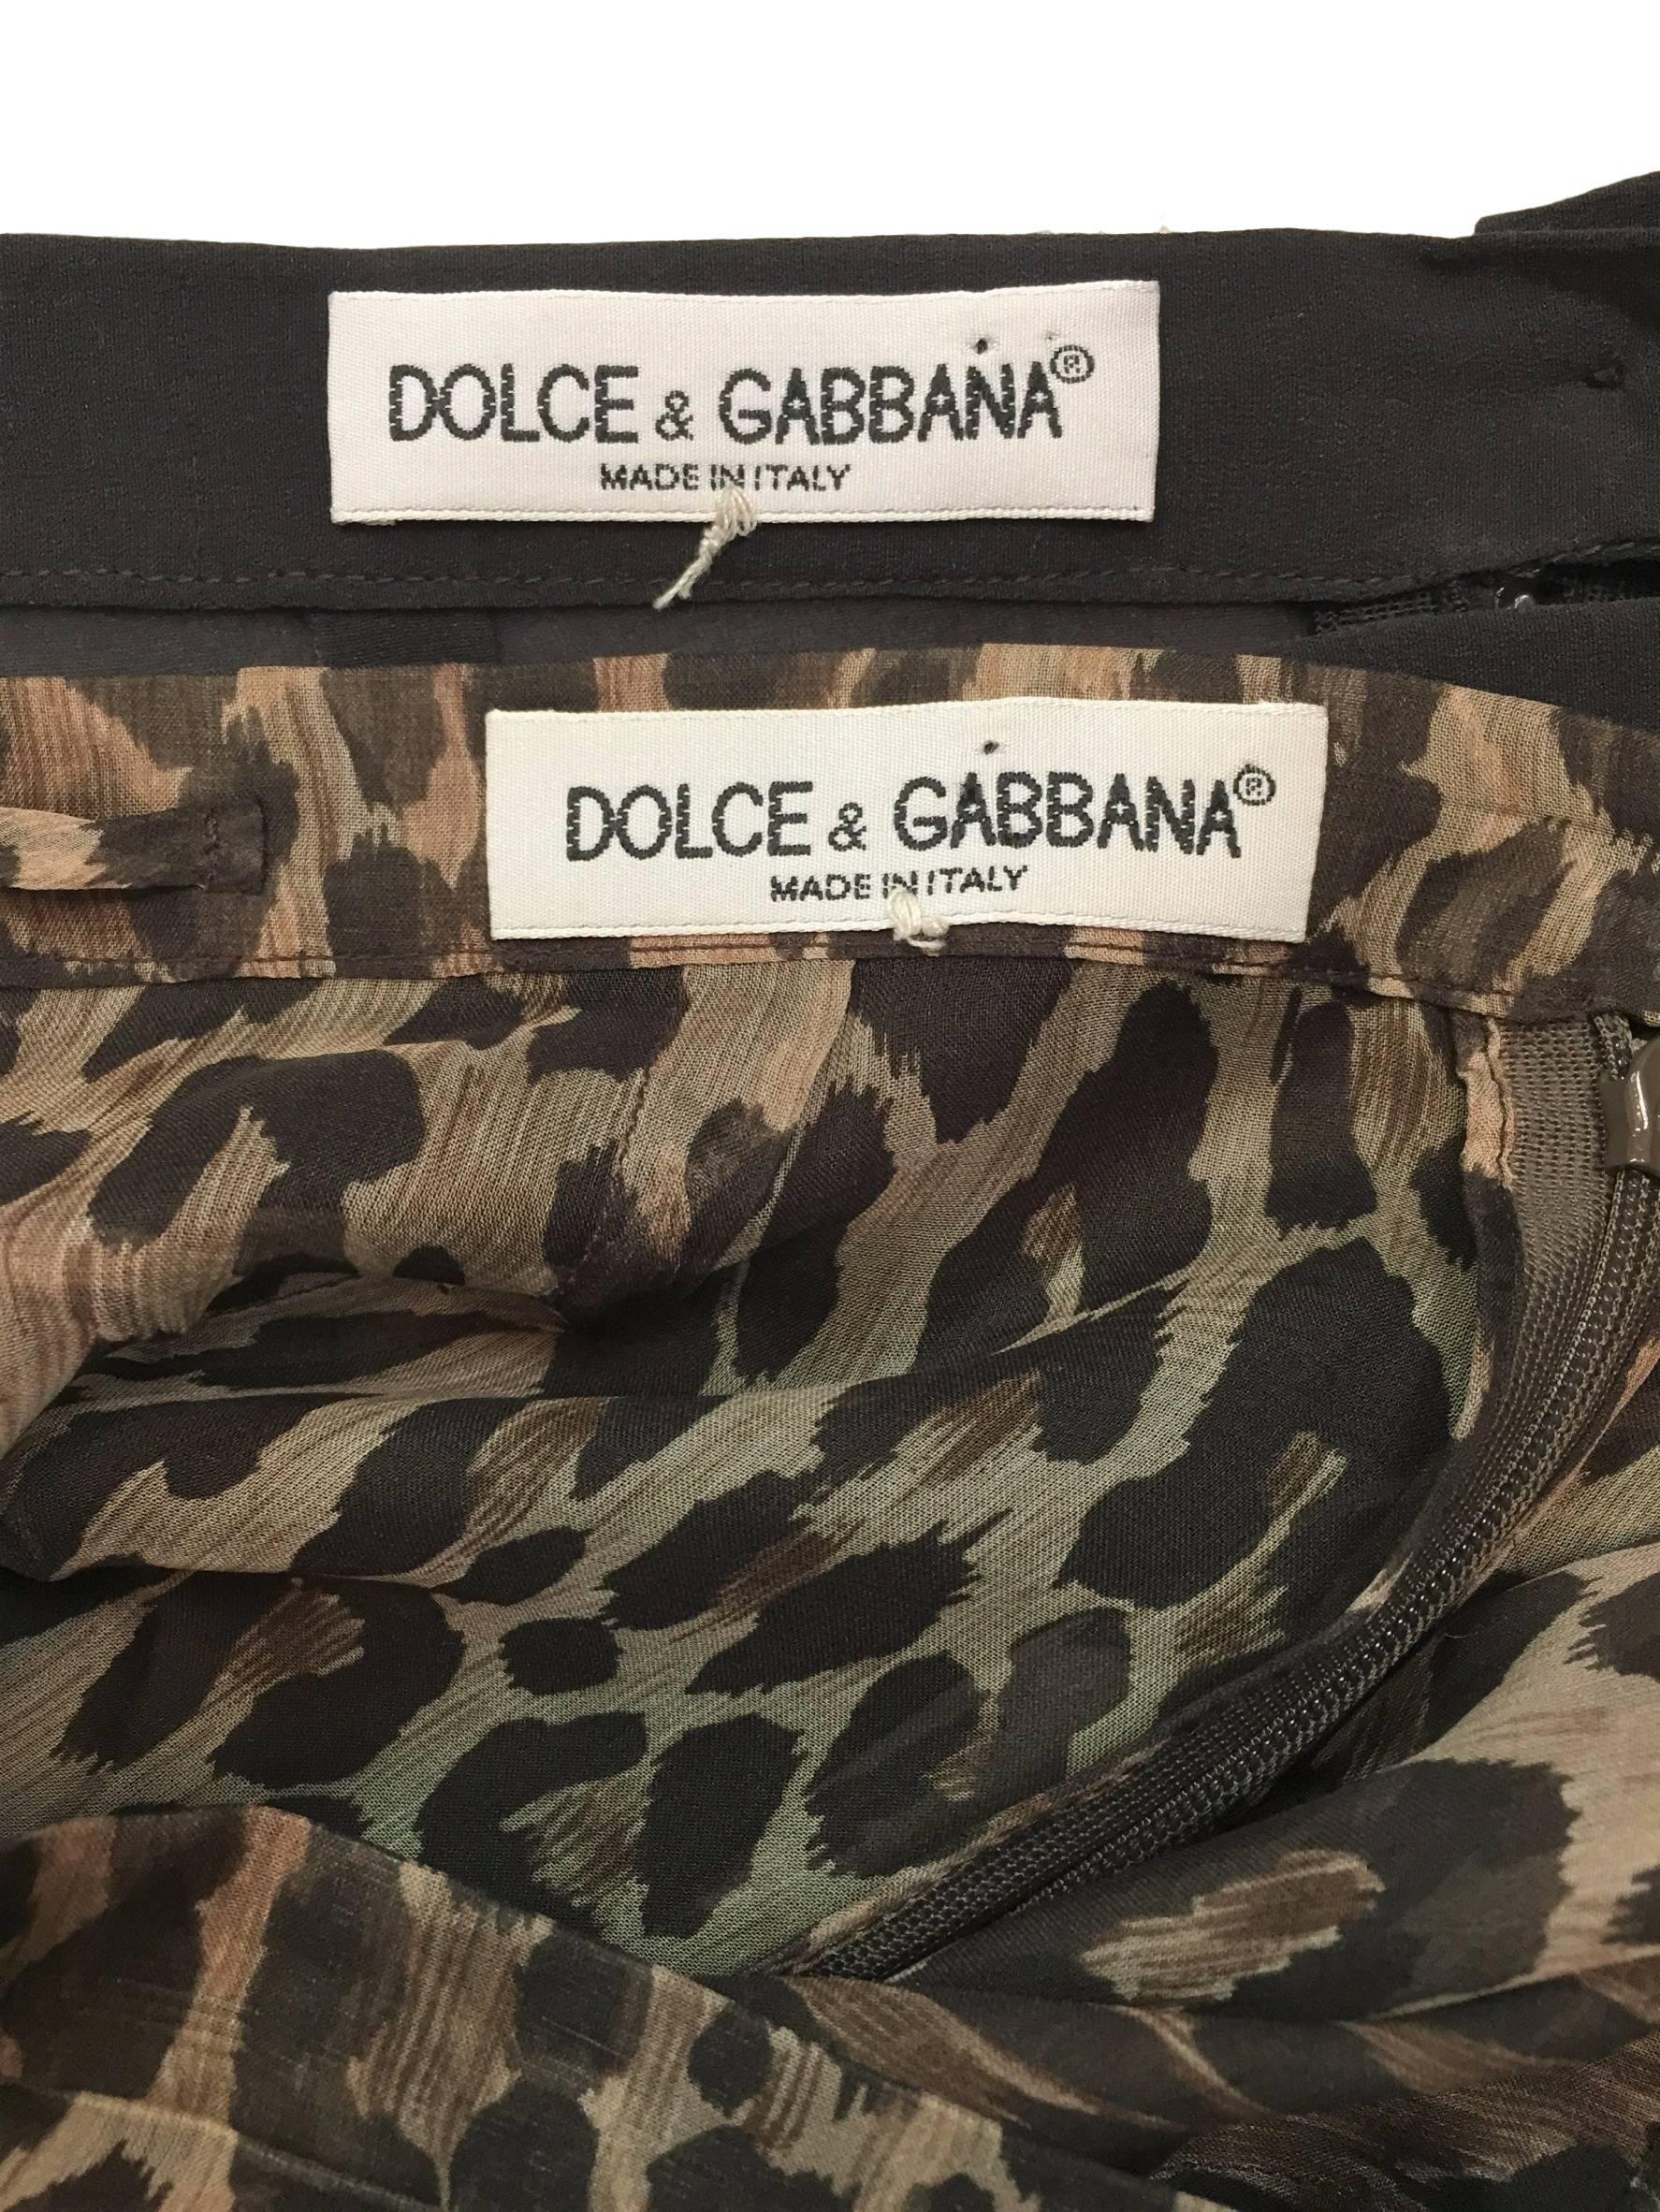 S/S 1997 Dolce & Gabbana Runway Leopard Silk Sheer Skirt Jacket Suit 2